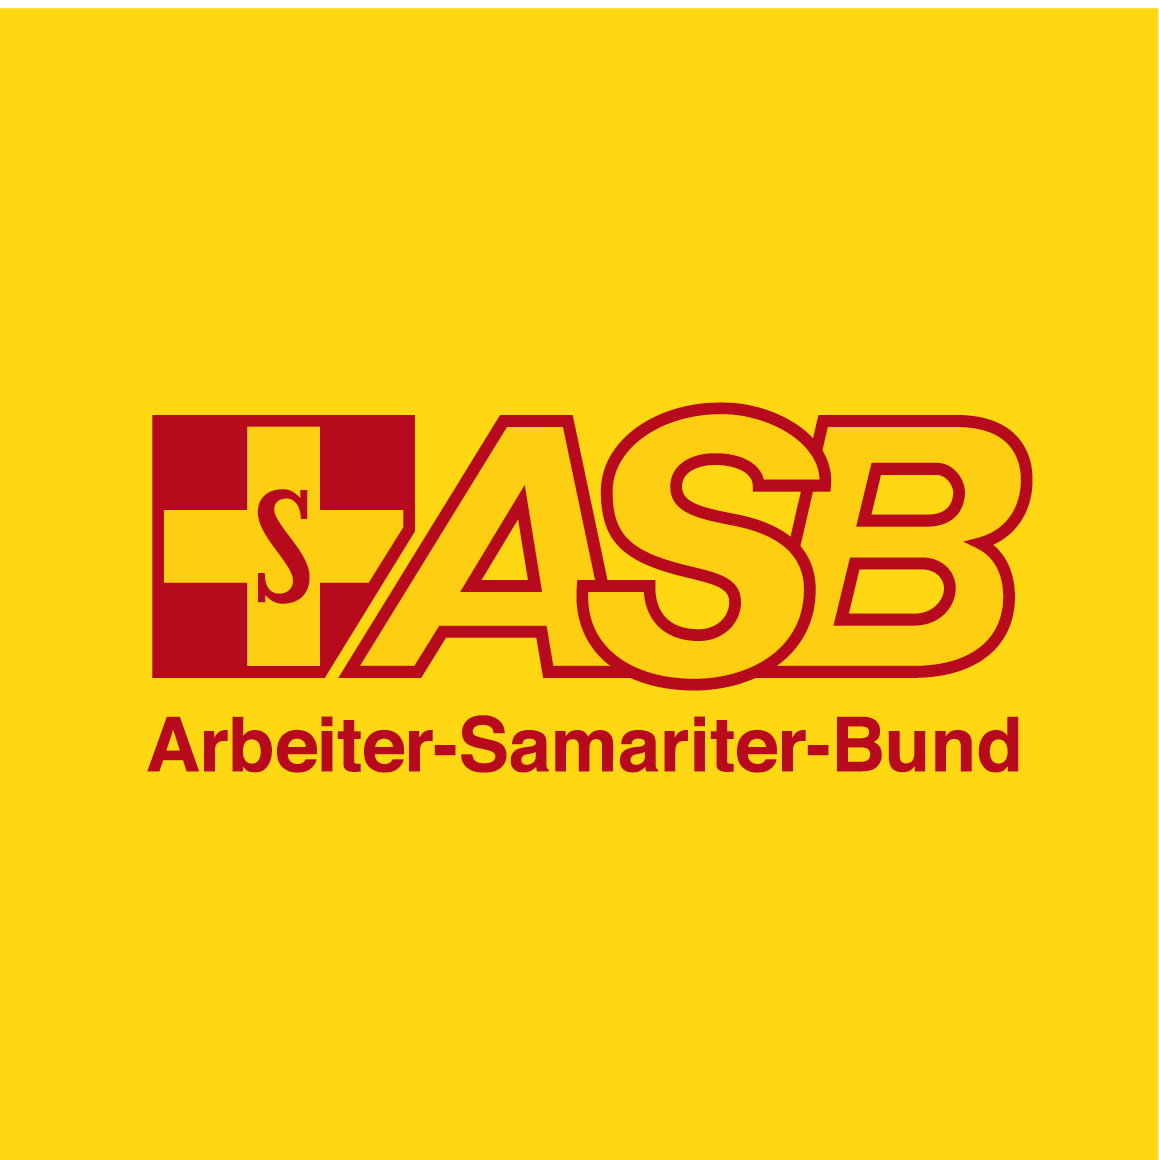 ASB Bremen Arbeiter-Samariter-Bund Landesverband Bremen e.V. Logo 2018-02-11.png